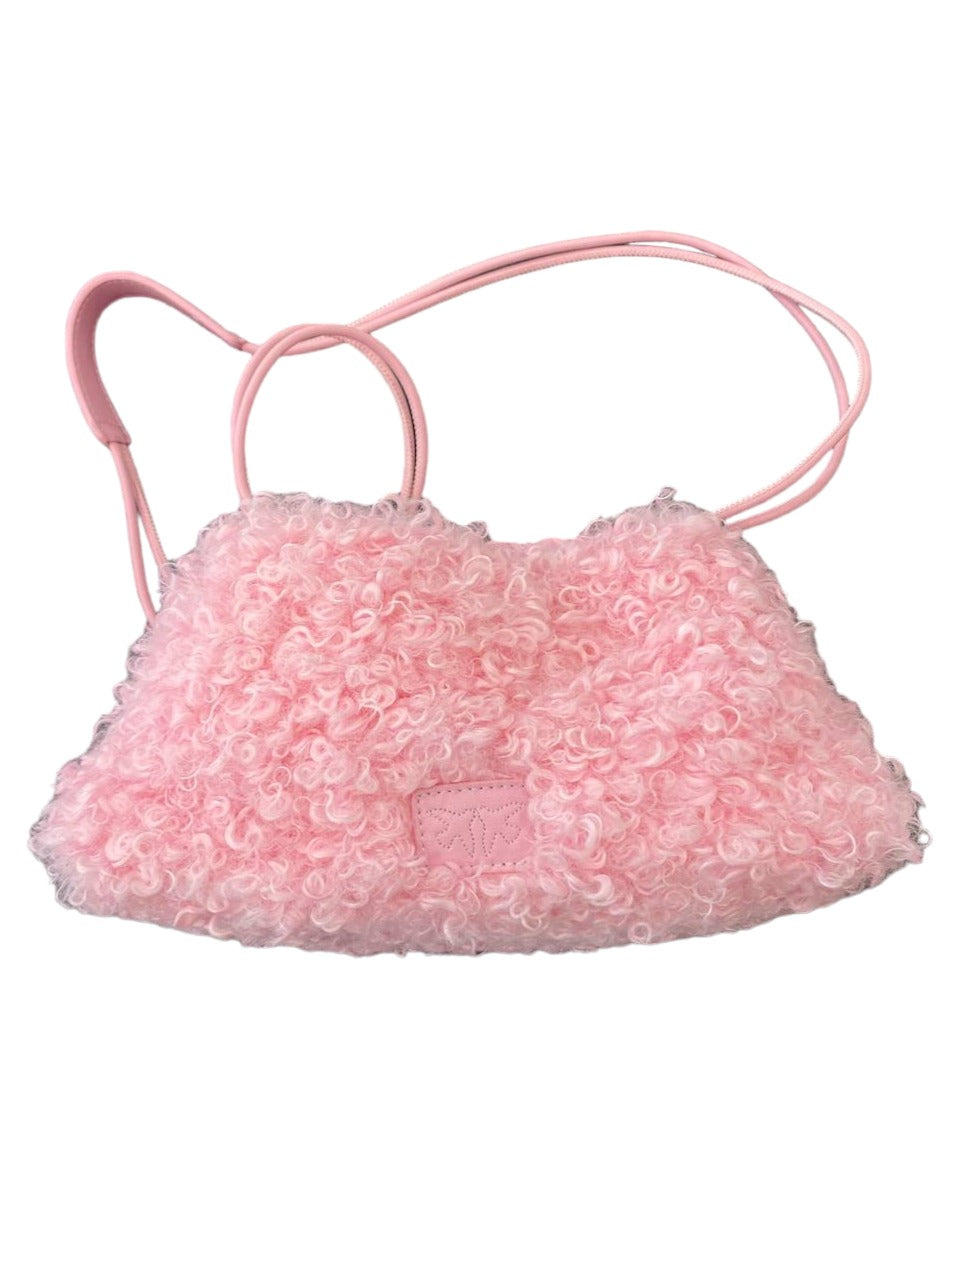 Cloud Pouch Neon Curls Pinko bag